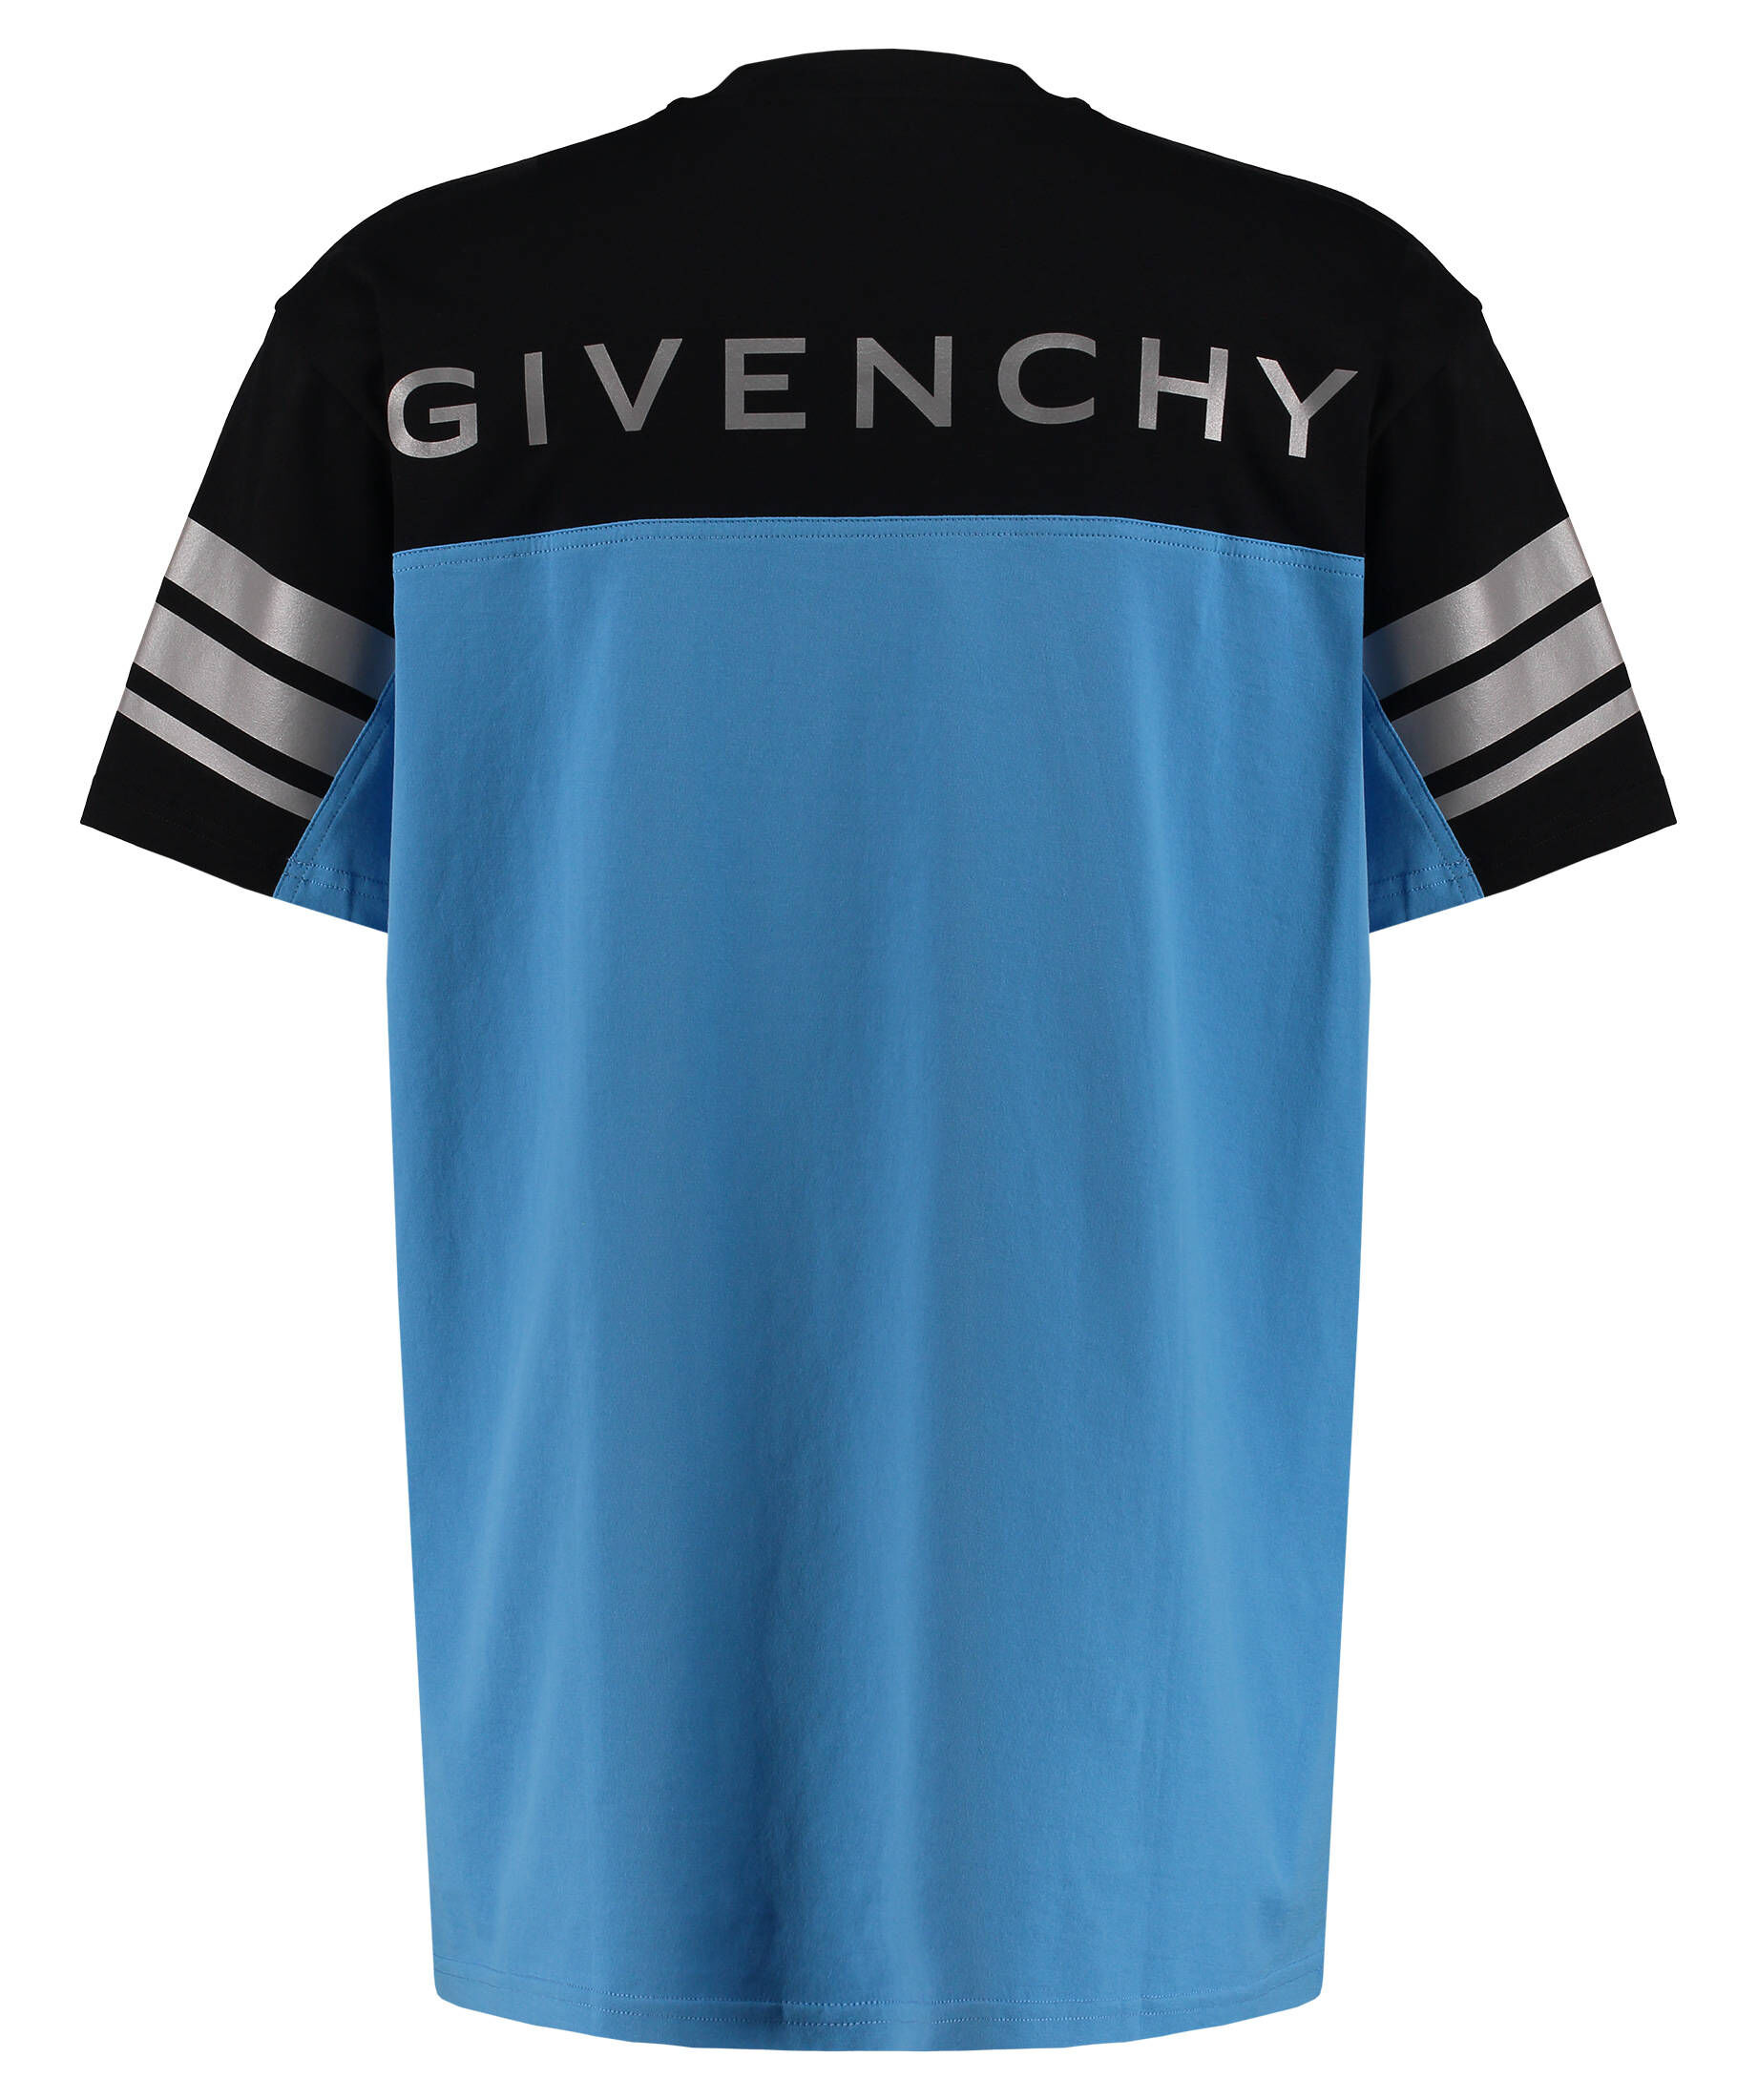 L T-Shirts Givenchy Herren T-Shirts GIVENCHY 3 Herren Kleidung Givenchy Herren T-Shirts & Polos Givenchy Herren T-Shirts Givenchy Herren weiß 